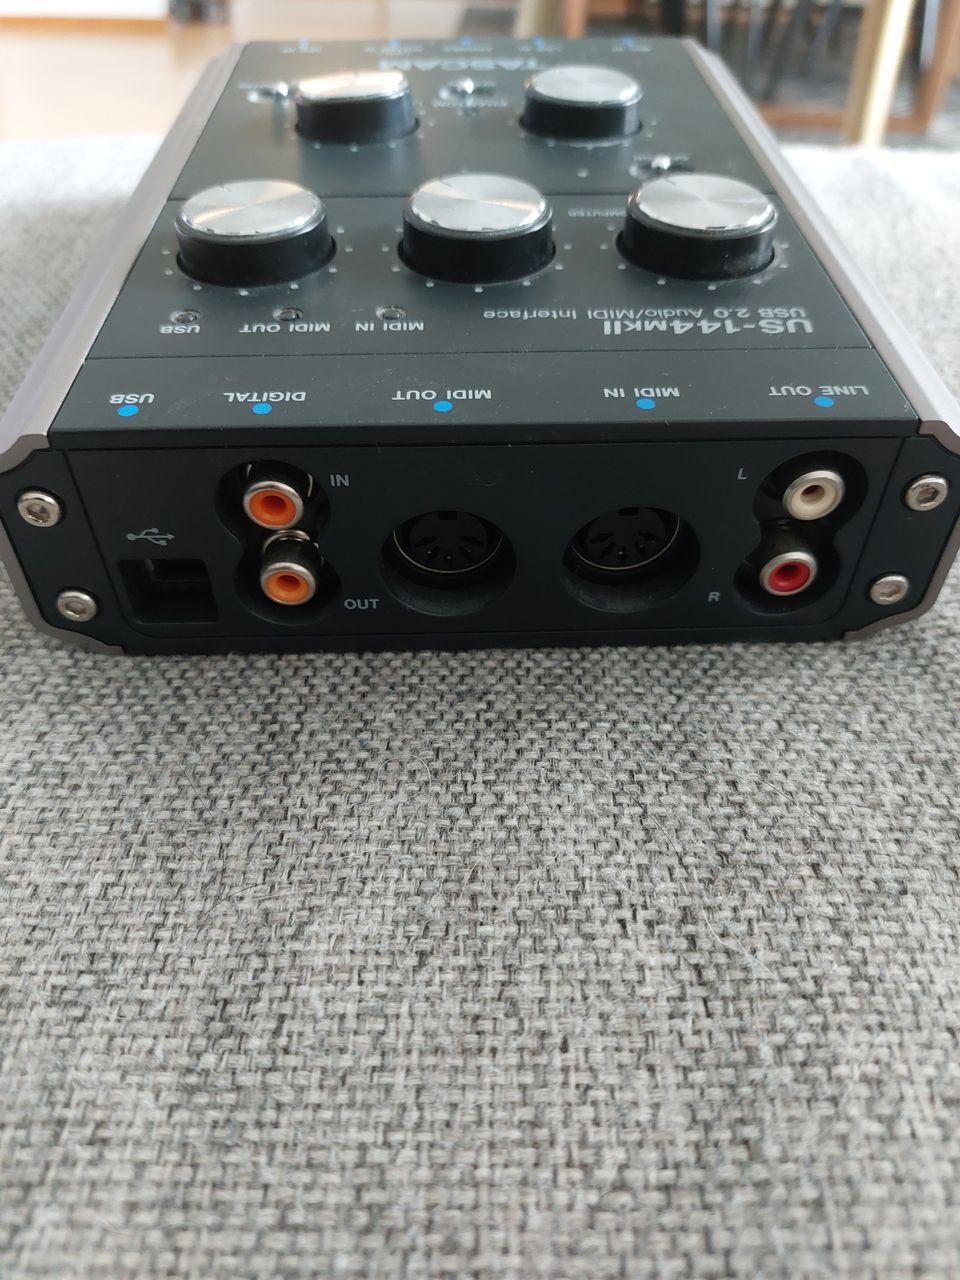 Audio/midi interface US-144 MK II